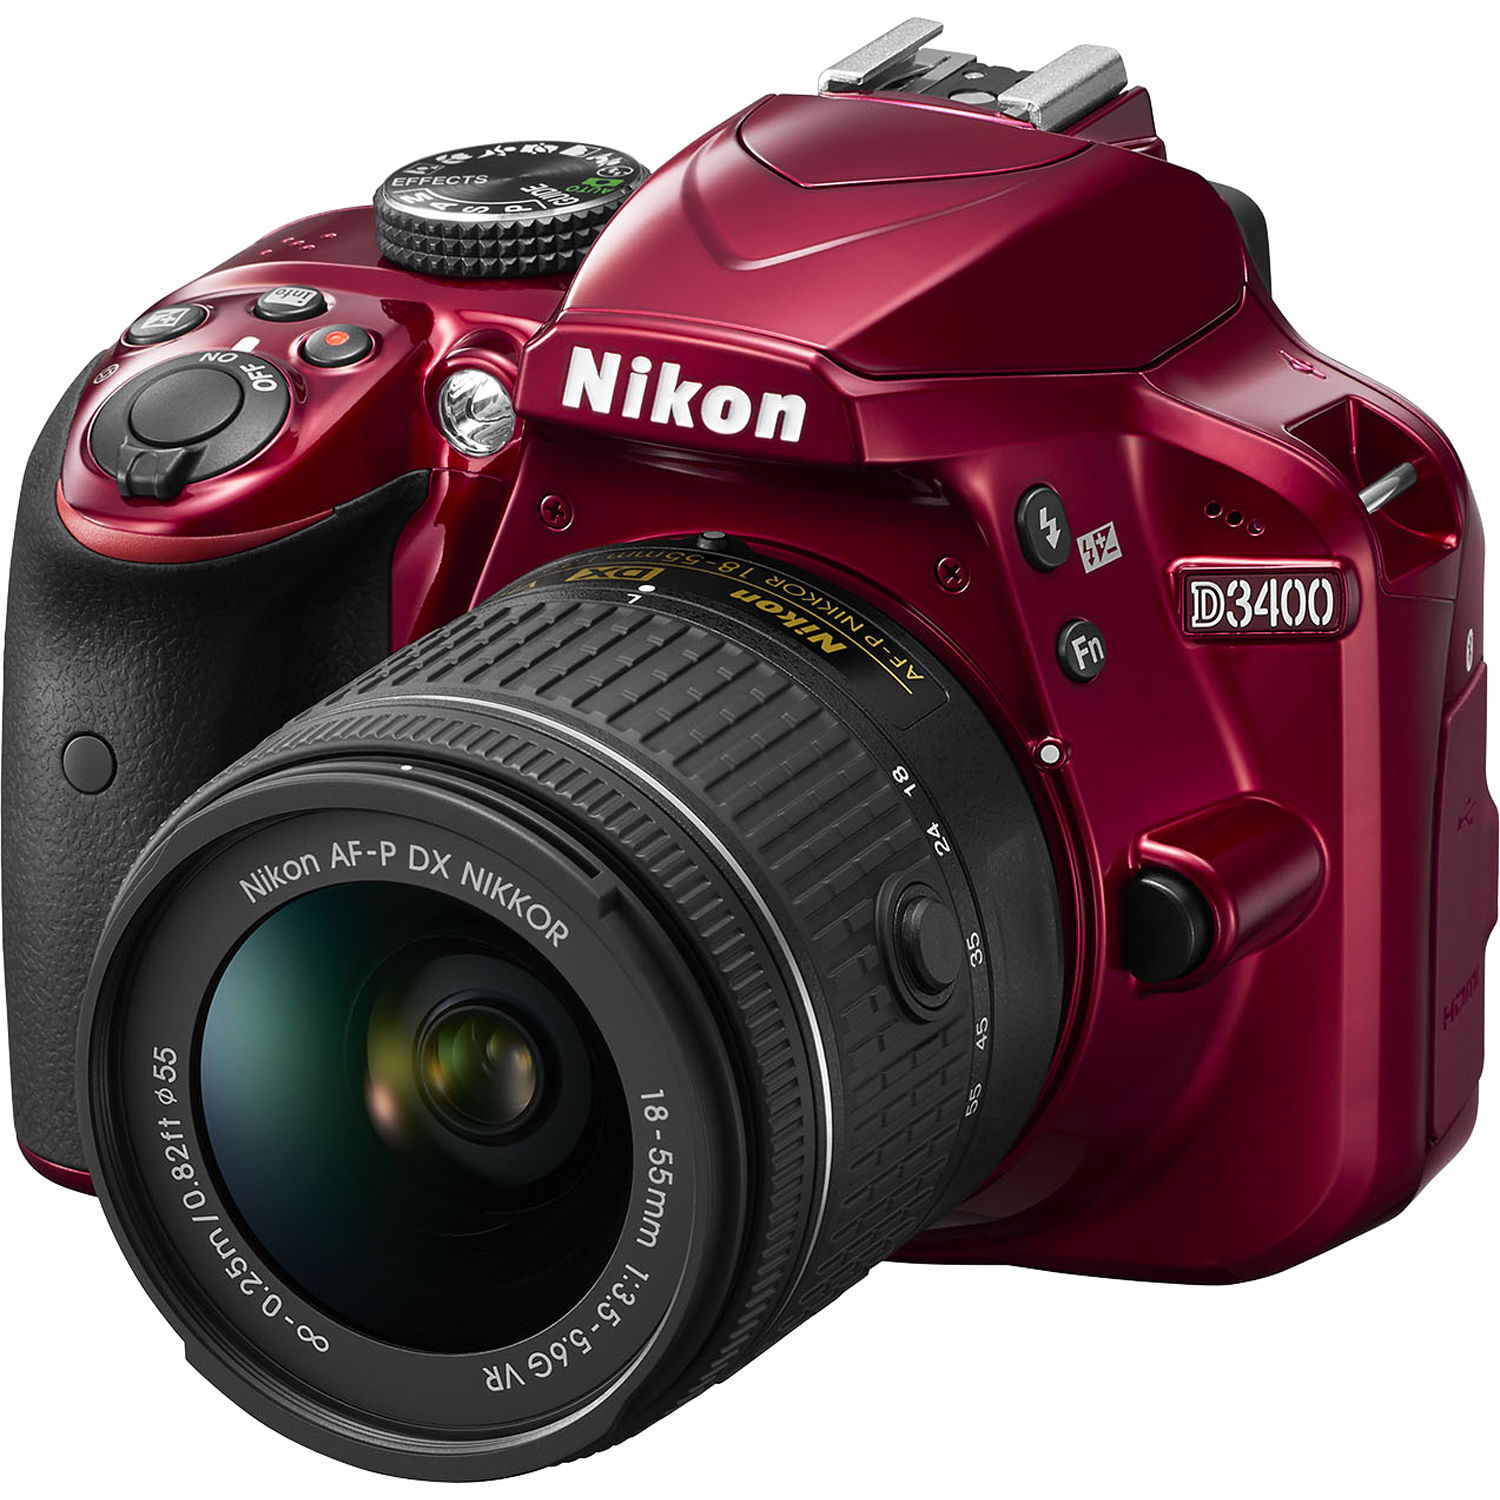 Nikon D3400 DSLR Camera with 18-55mm Lens (Red) 1572 B&H Photo